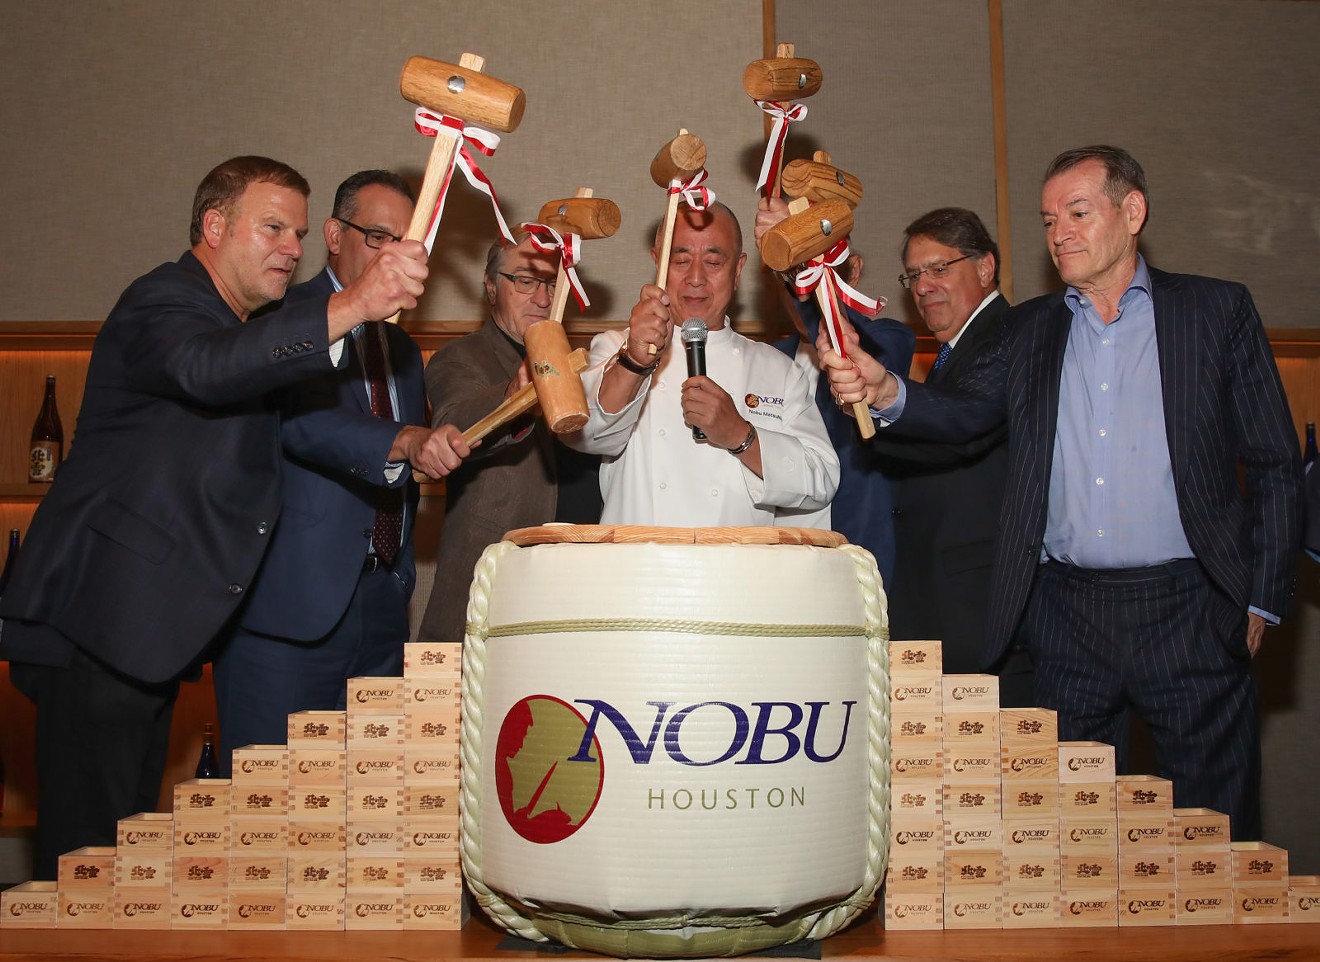 Nobu Founders Robert De Niro, Chef Nobu Matsuhisa, Meir Teper, and friends break open a 5-gallon sake barrel at the Nobu Houston Sake Ceremony.